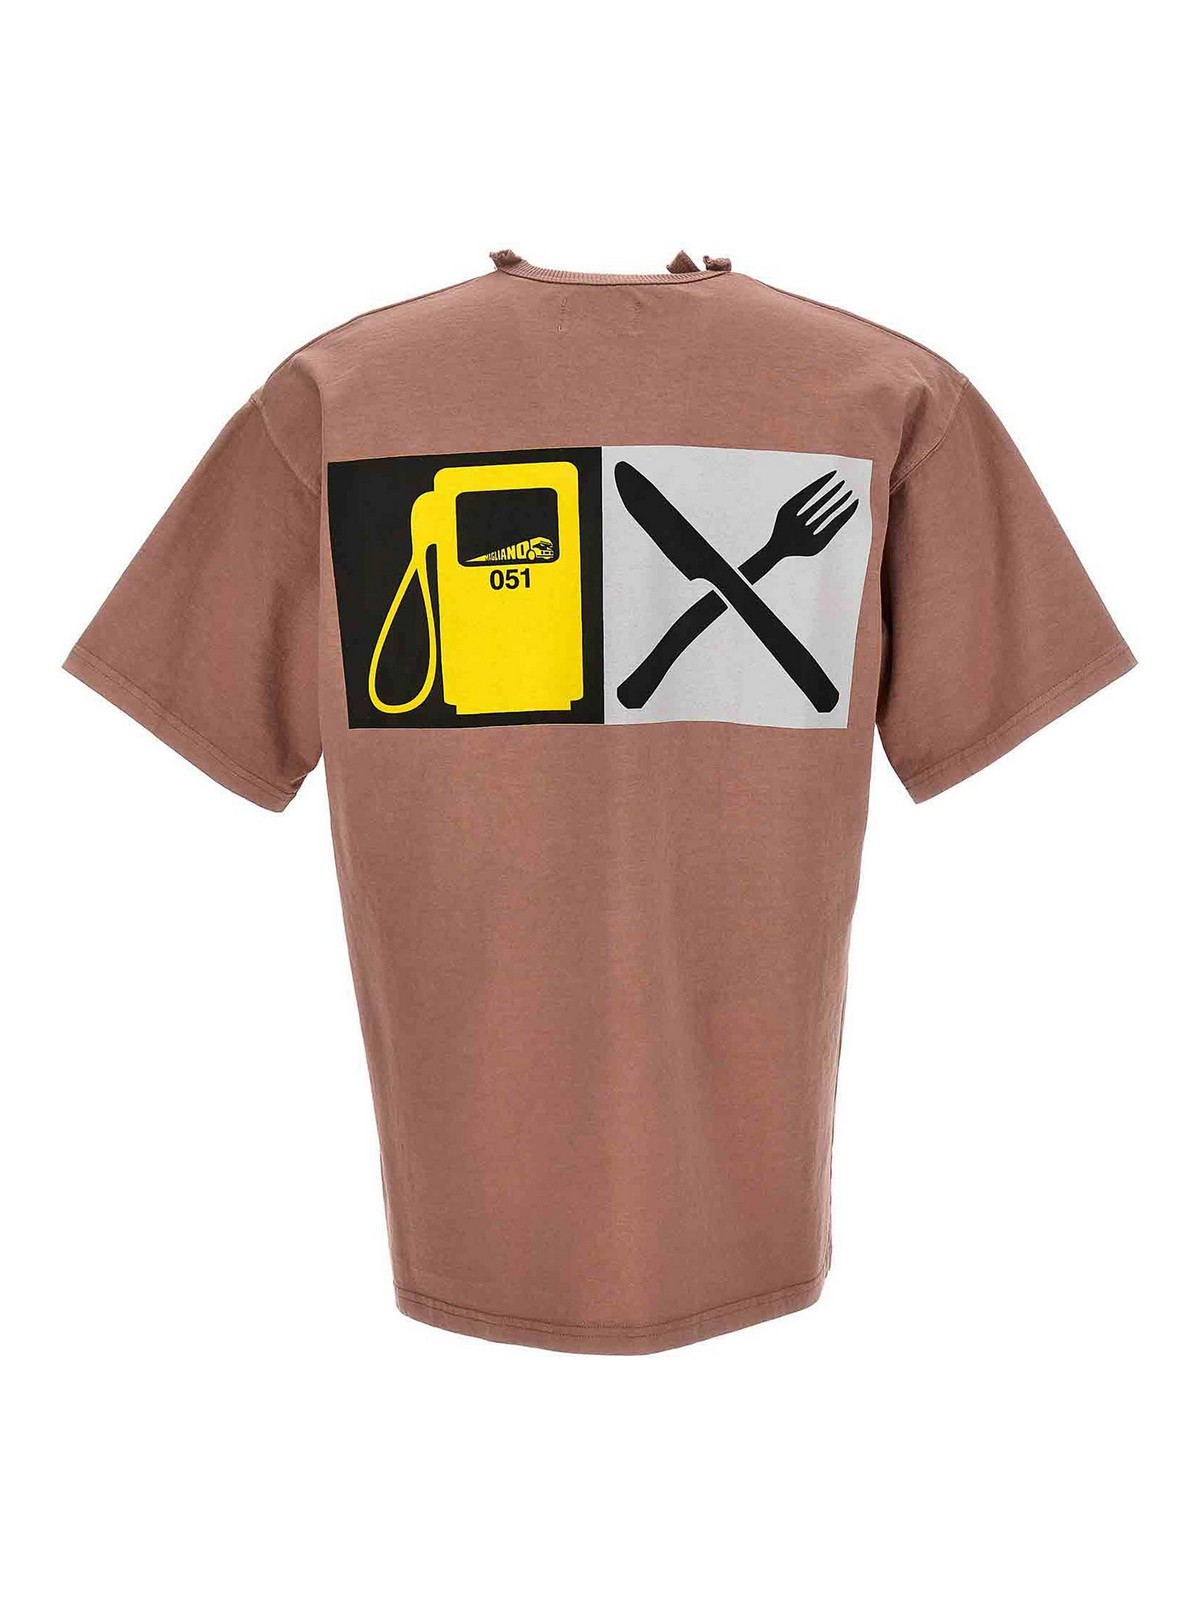 Camisetas Magliano - Camiseta - Color Carne Y Neutral - Q5801062704